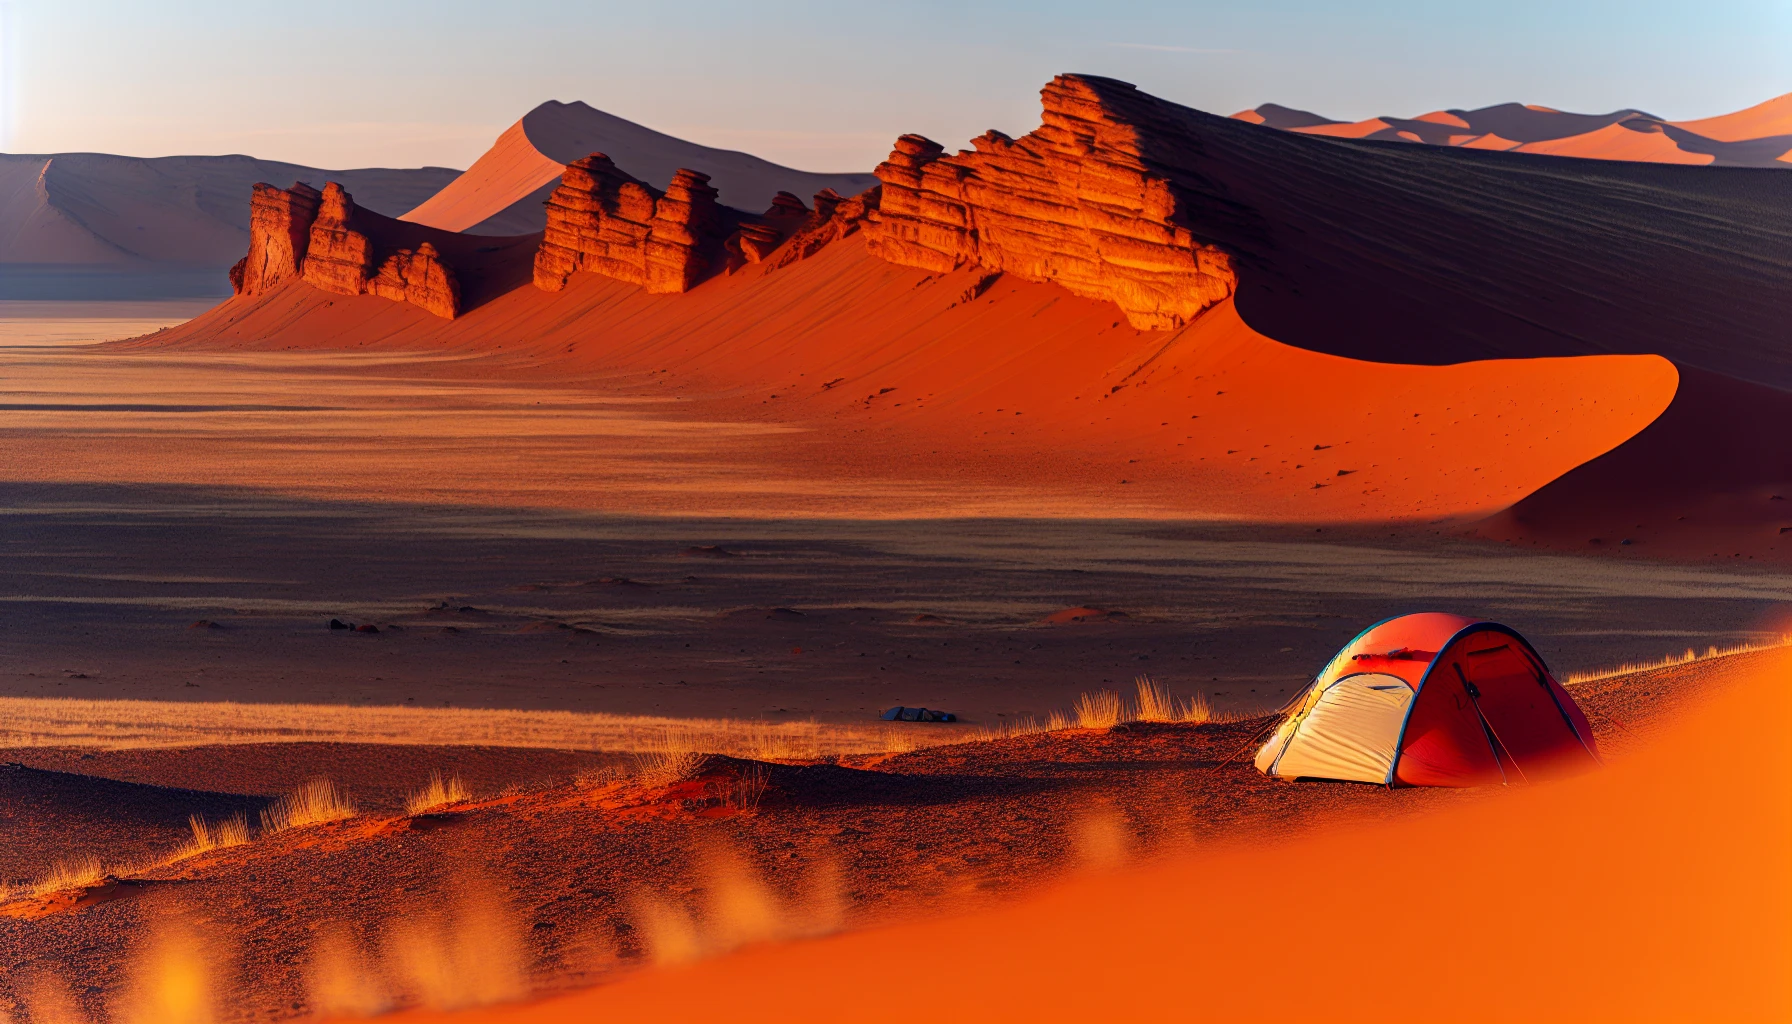 Wild camping in the Gobi Desert